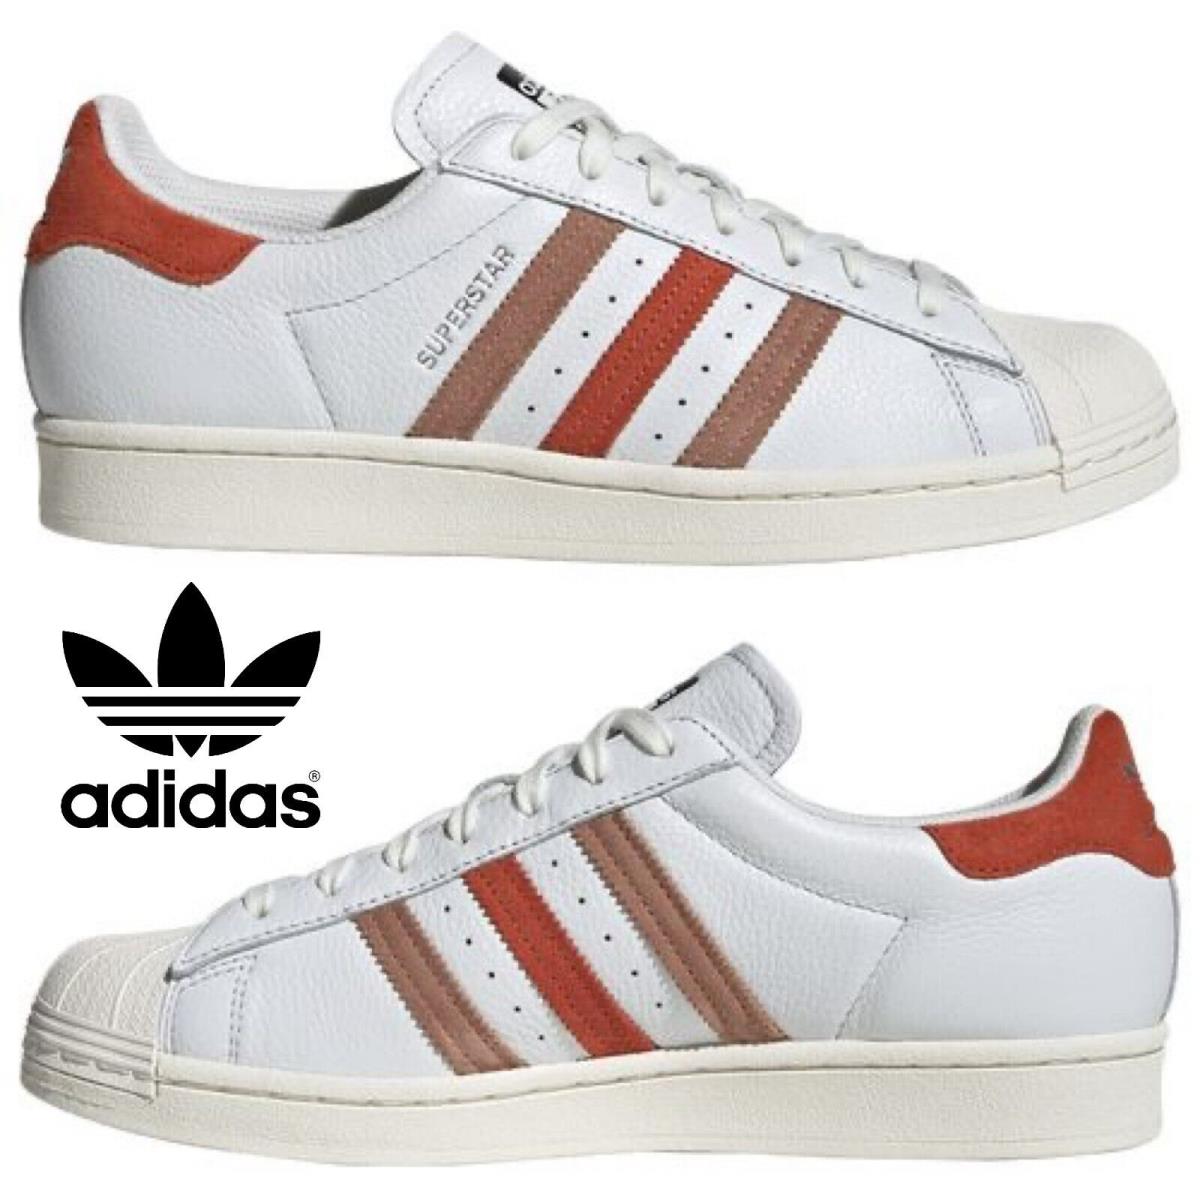 Adidas Originals Superstar Men`s Sneakers Comfort Sport Casual Shoe White Red